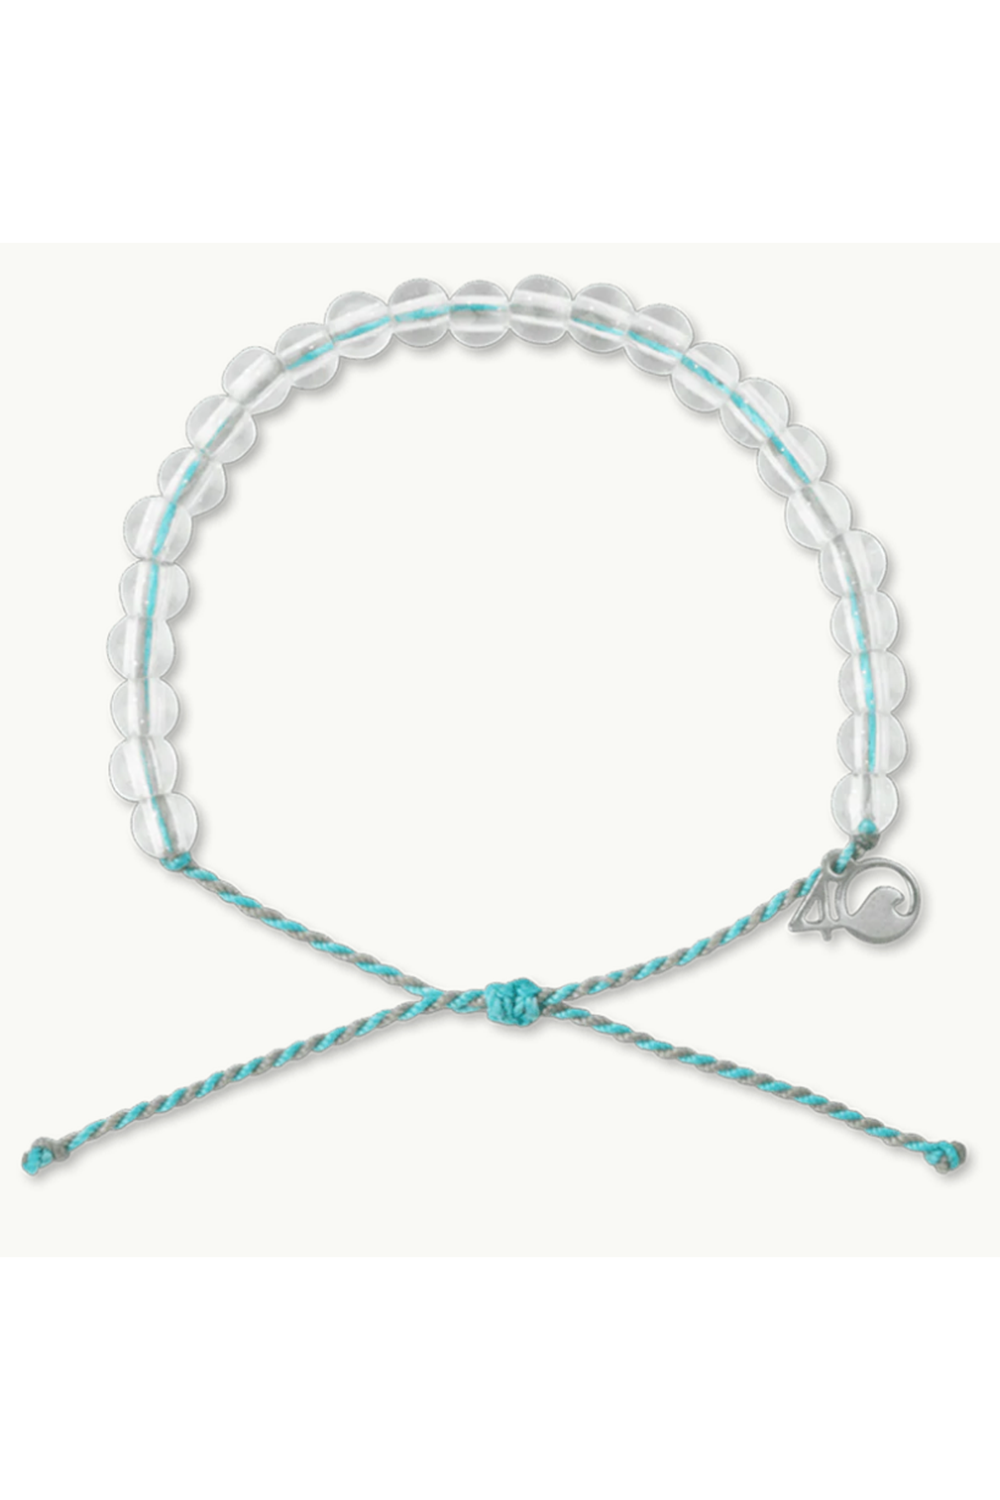 4Ocean Bracelet - Signature Blue Clean Ocean — Bird in Hand